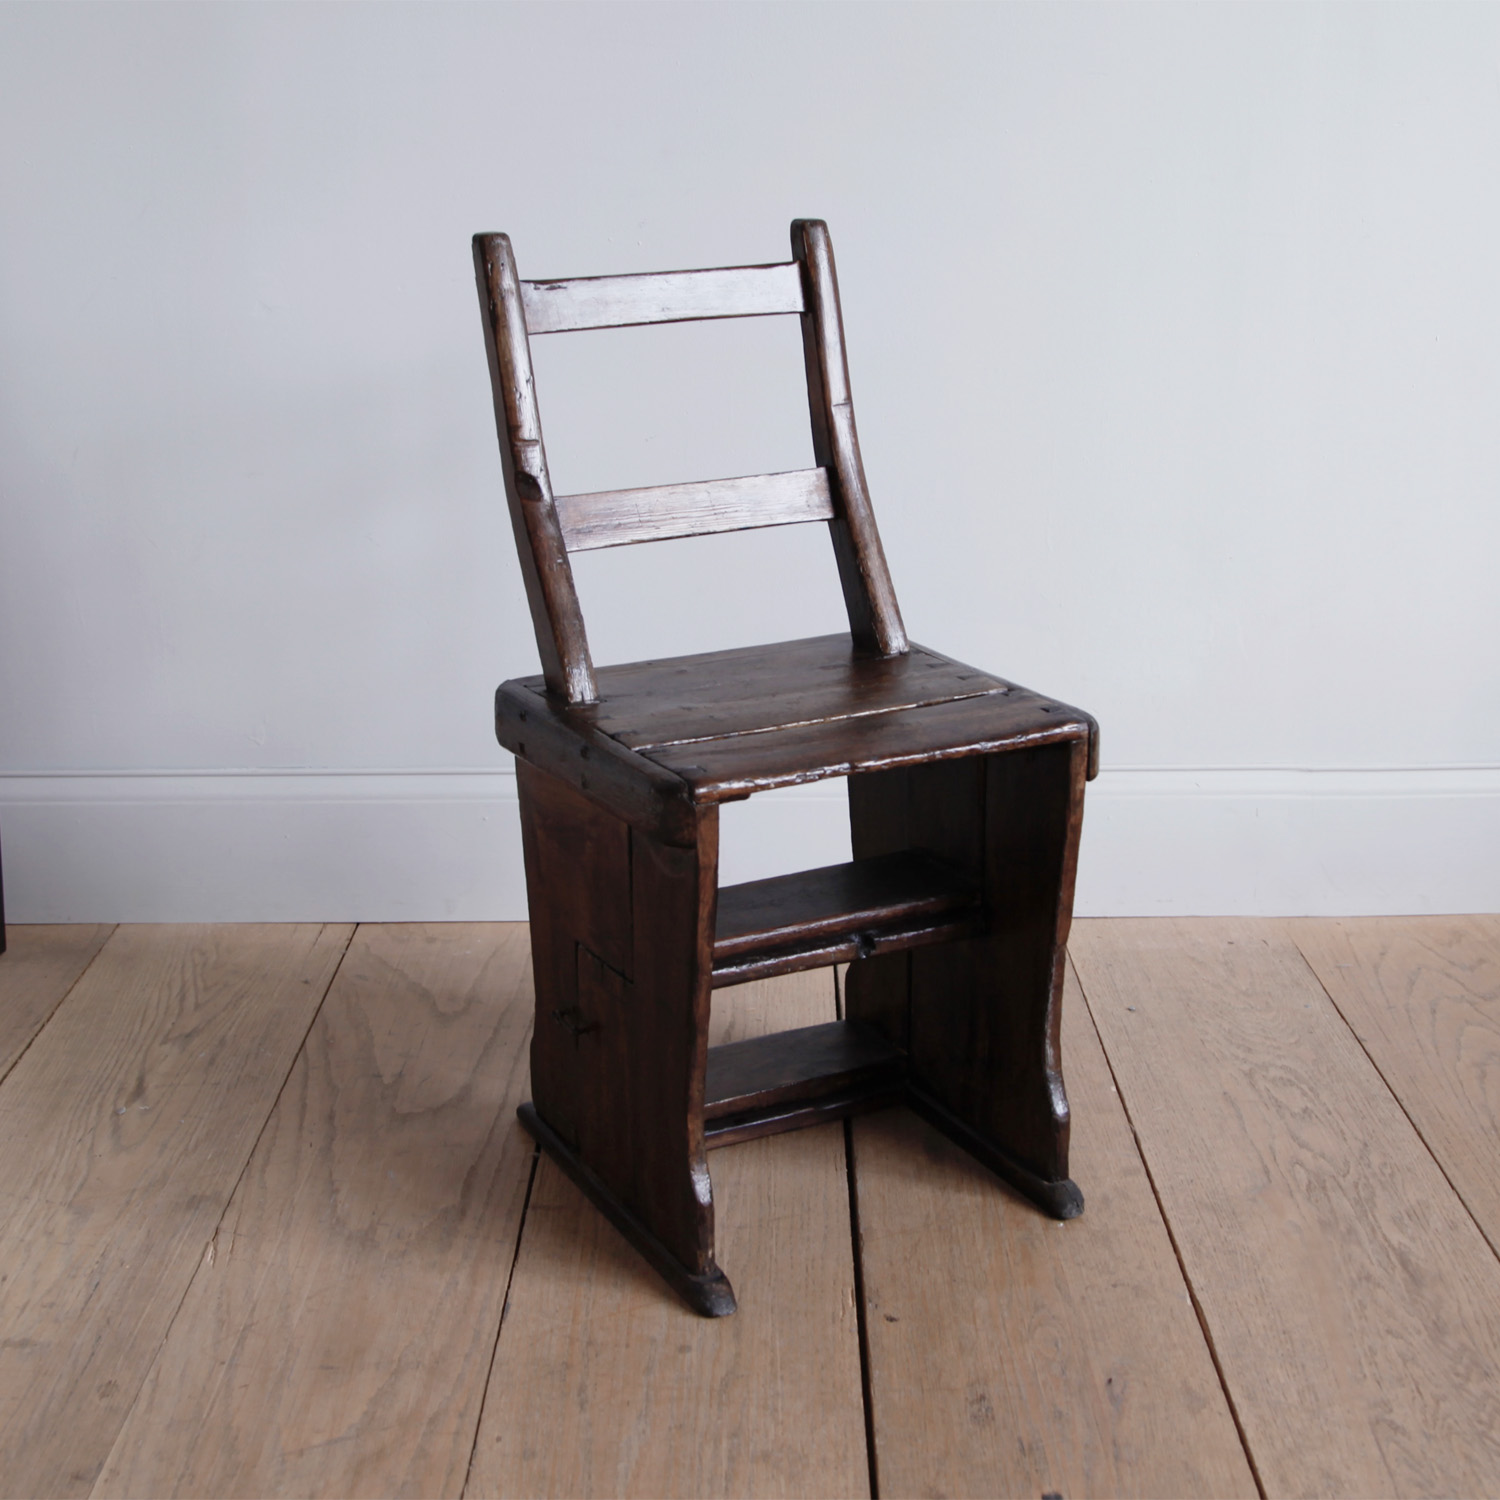 19th century Belgian Metamorphic Library Chair